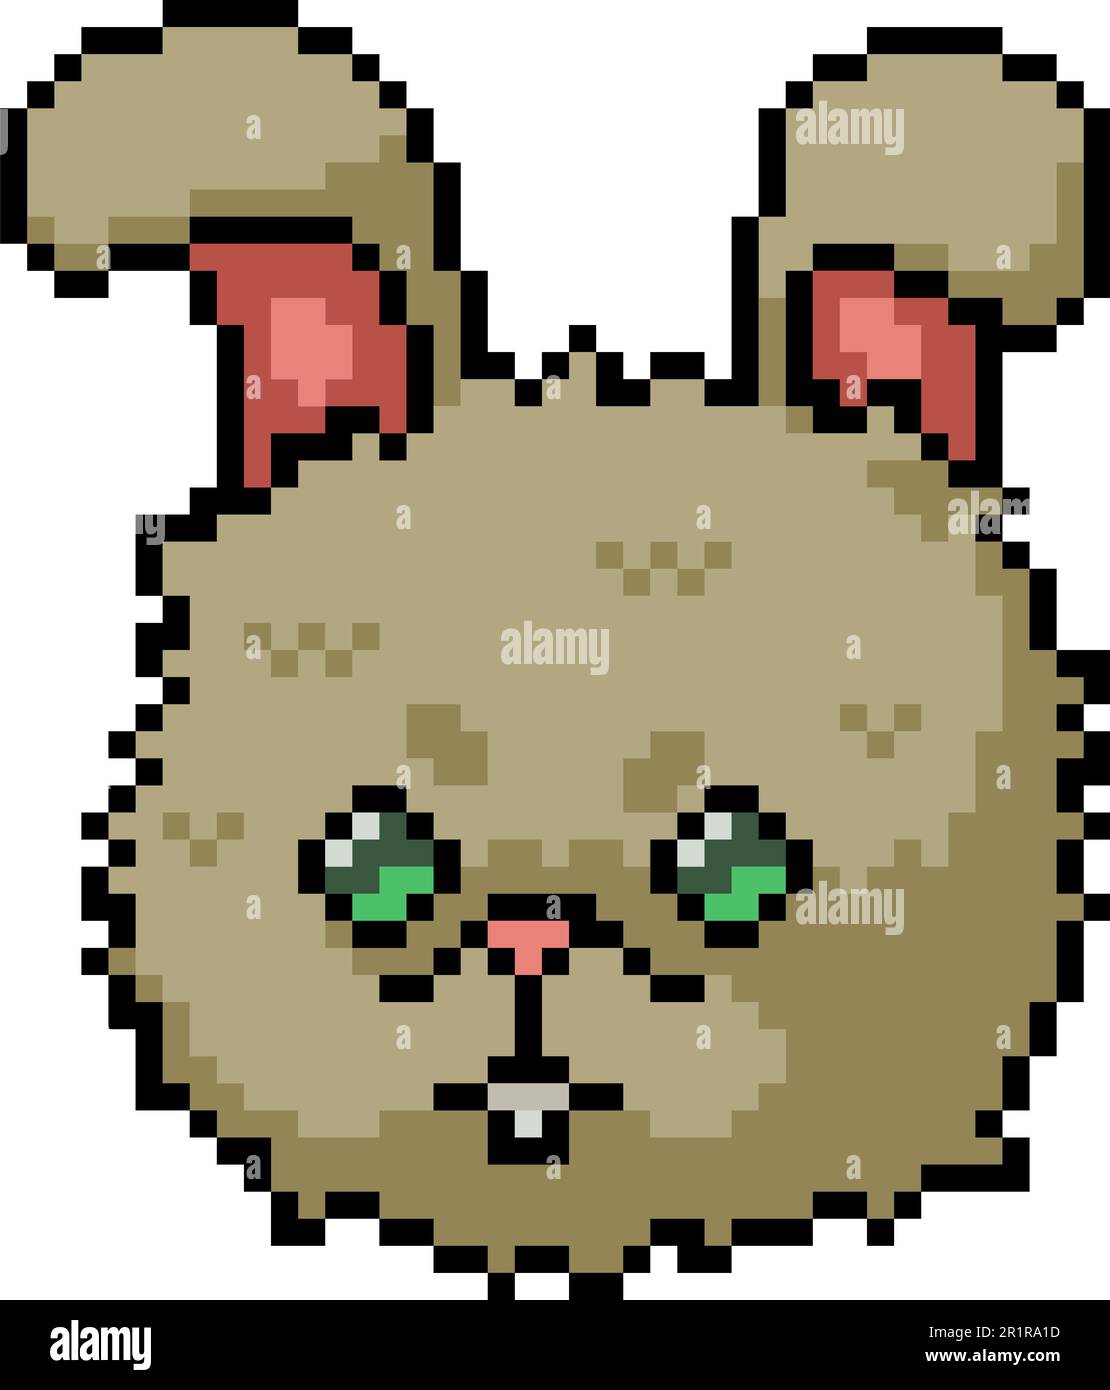 Pixilart - gato pixelado by Anonymous